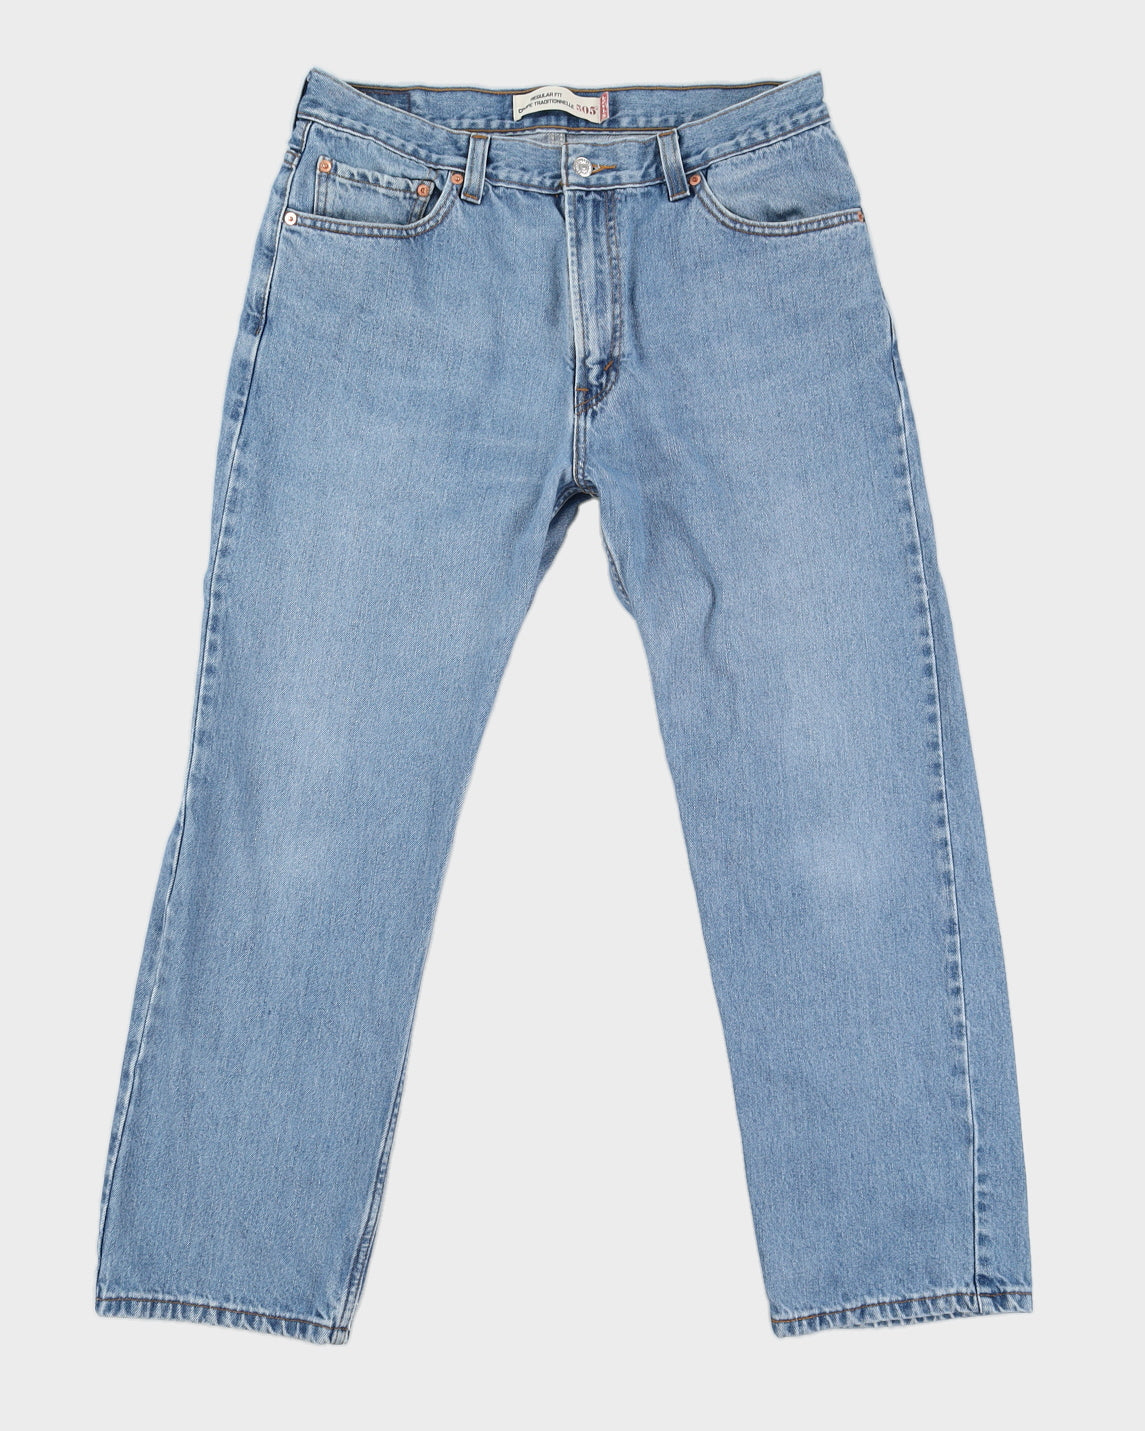 Vintage Levi's 505 Medium Wash Blue Denim Jeans - W36 L30